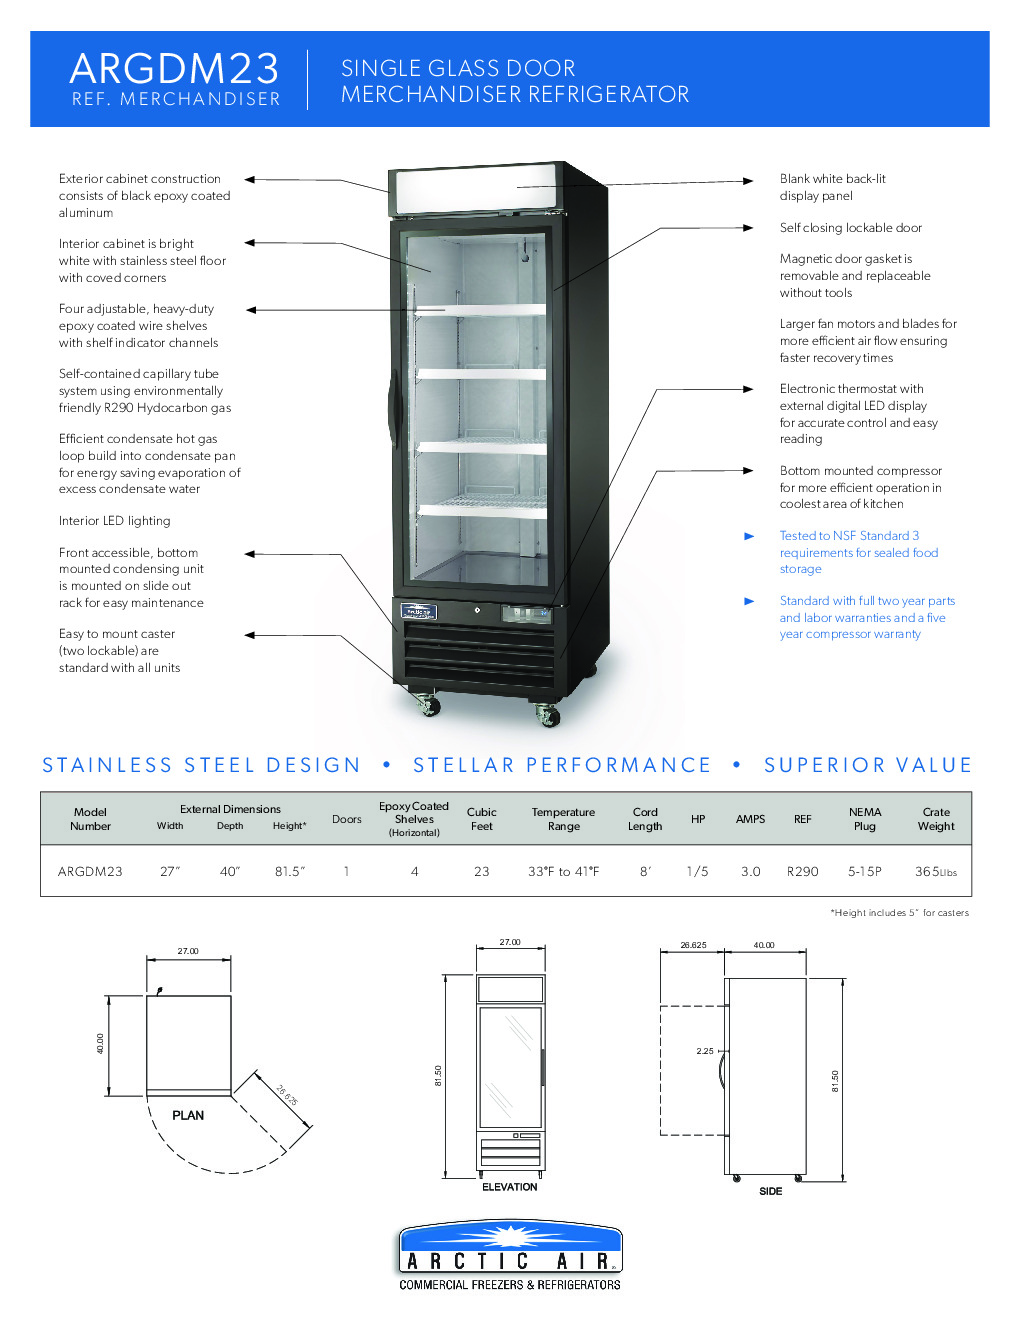 Arctic Air ARGDM23 Merchandiser Refrigerator